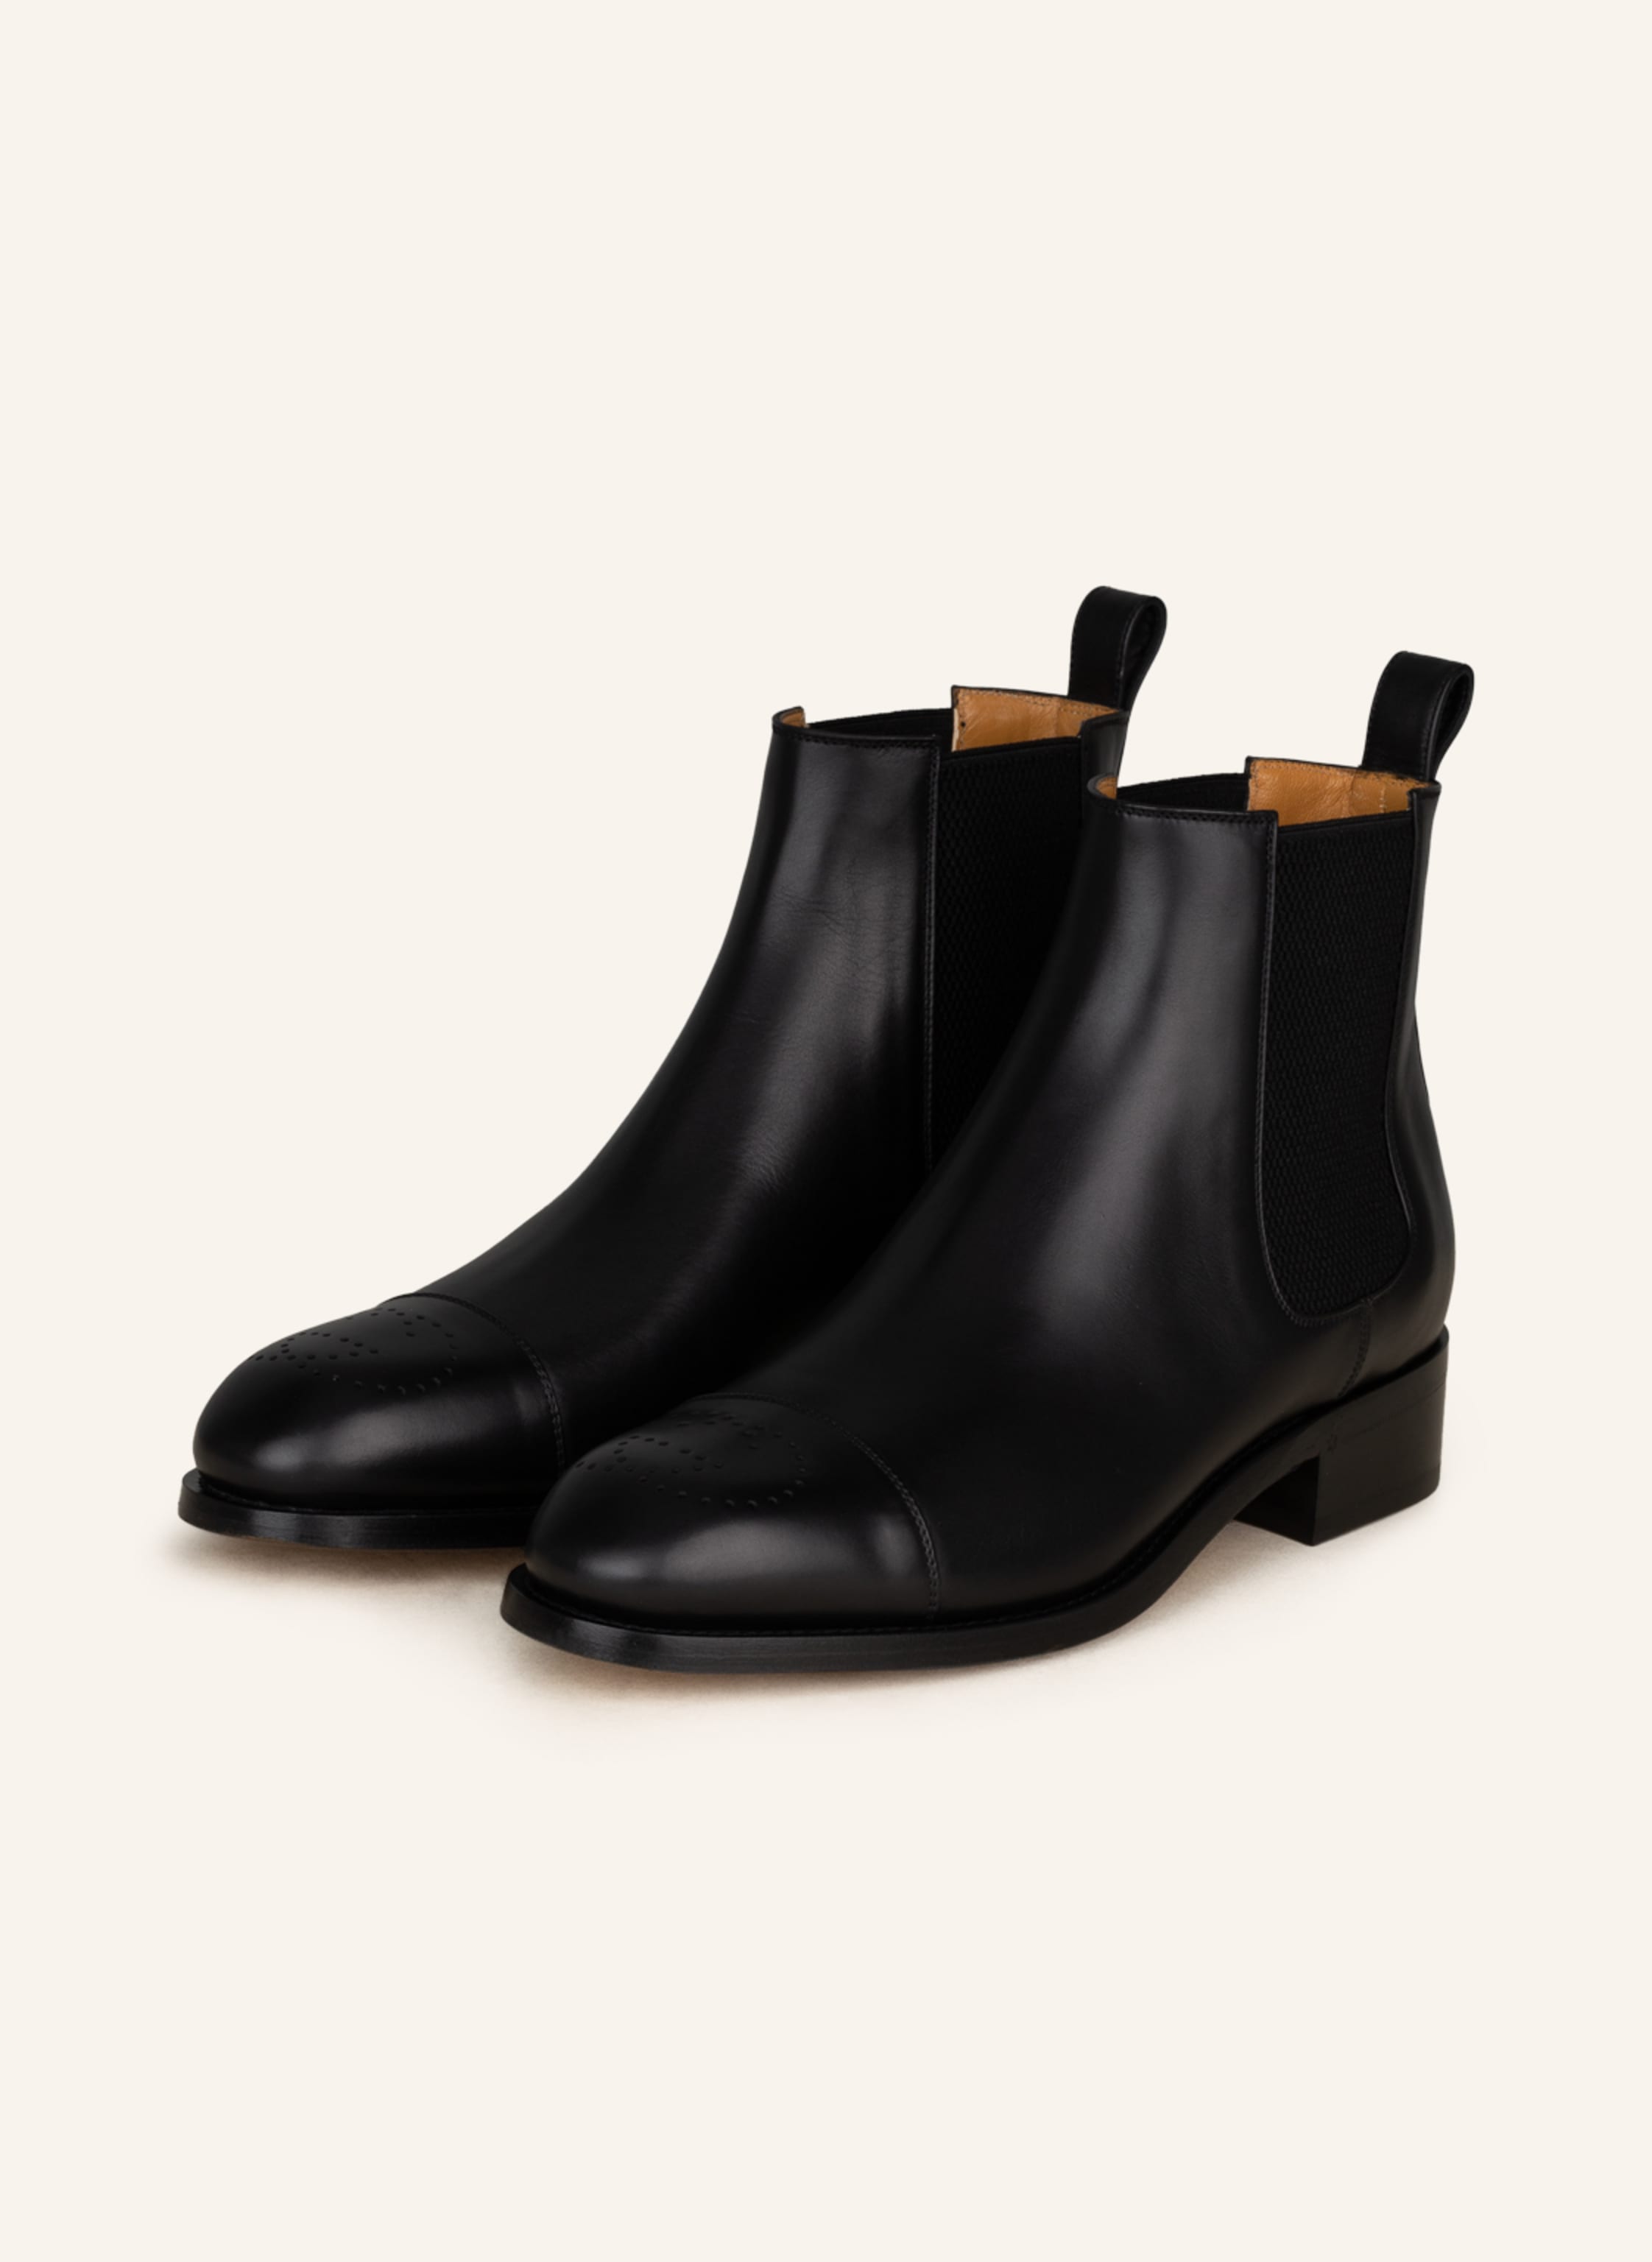 Gucci Boots for Men, Chelsea & Rain Boots